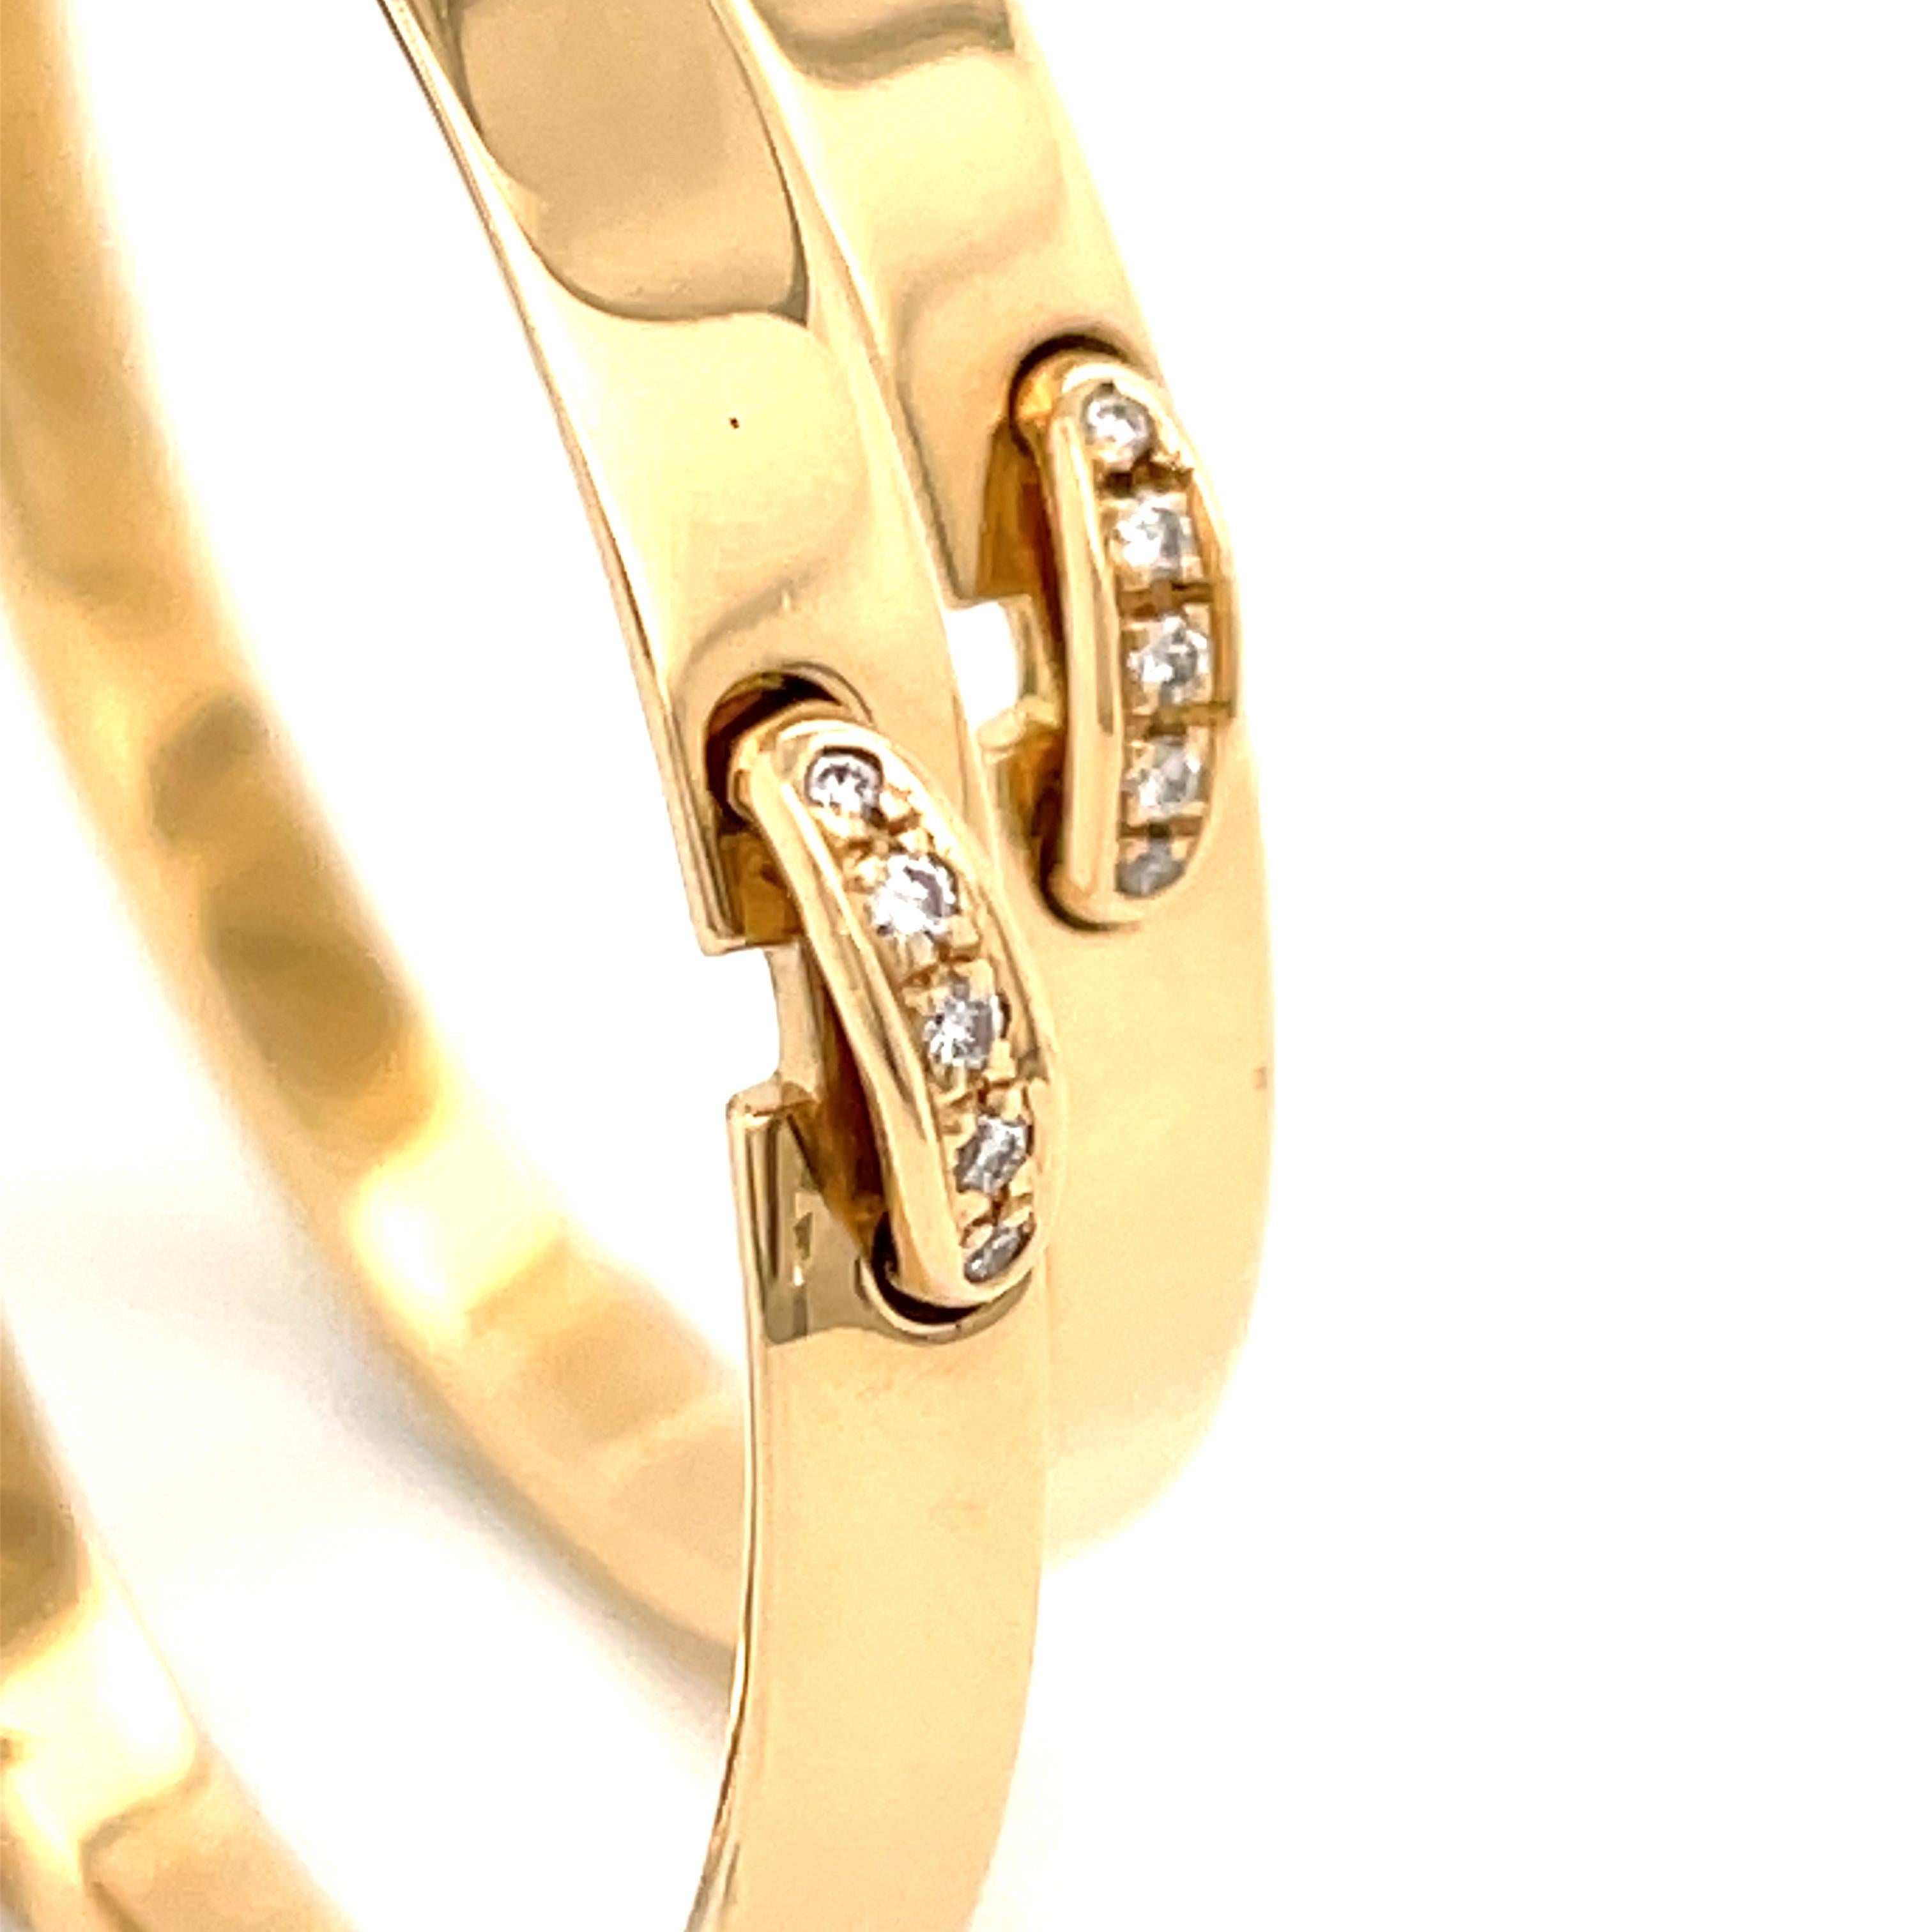 Modernist Chaumet Liens Evidence Large 18k Gold and Diamond Hoop Earrings